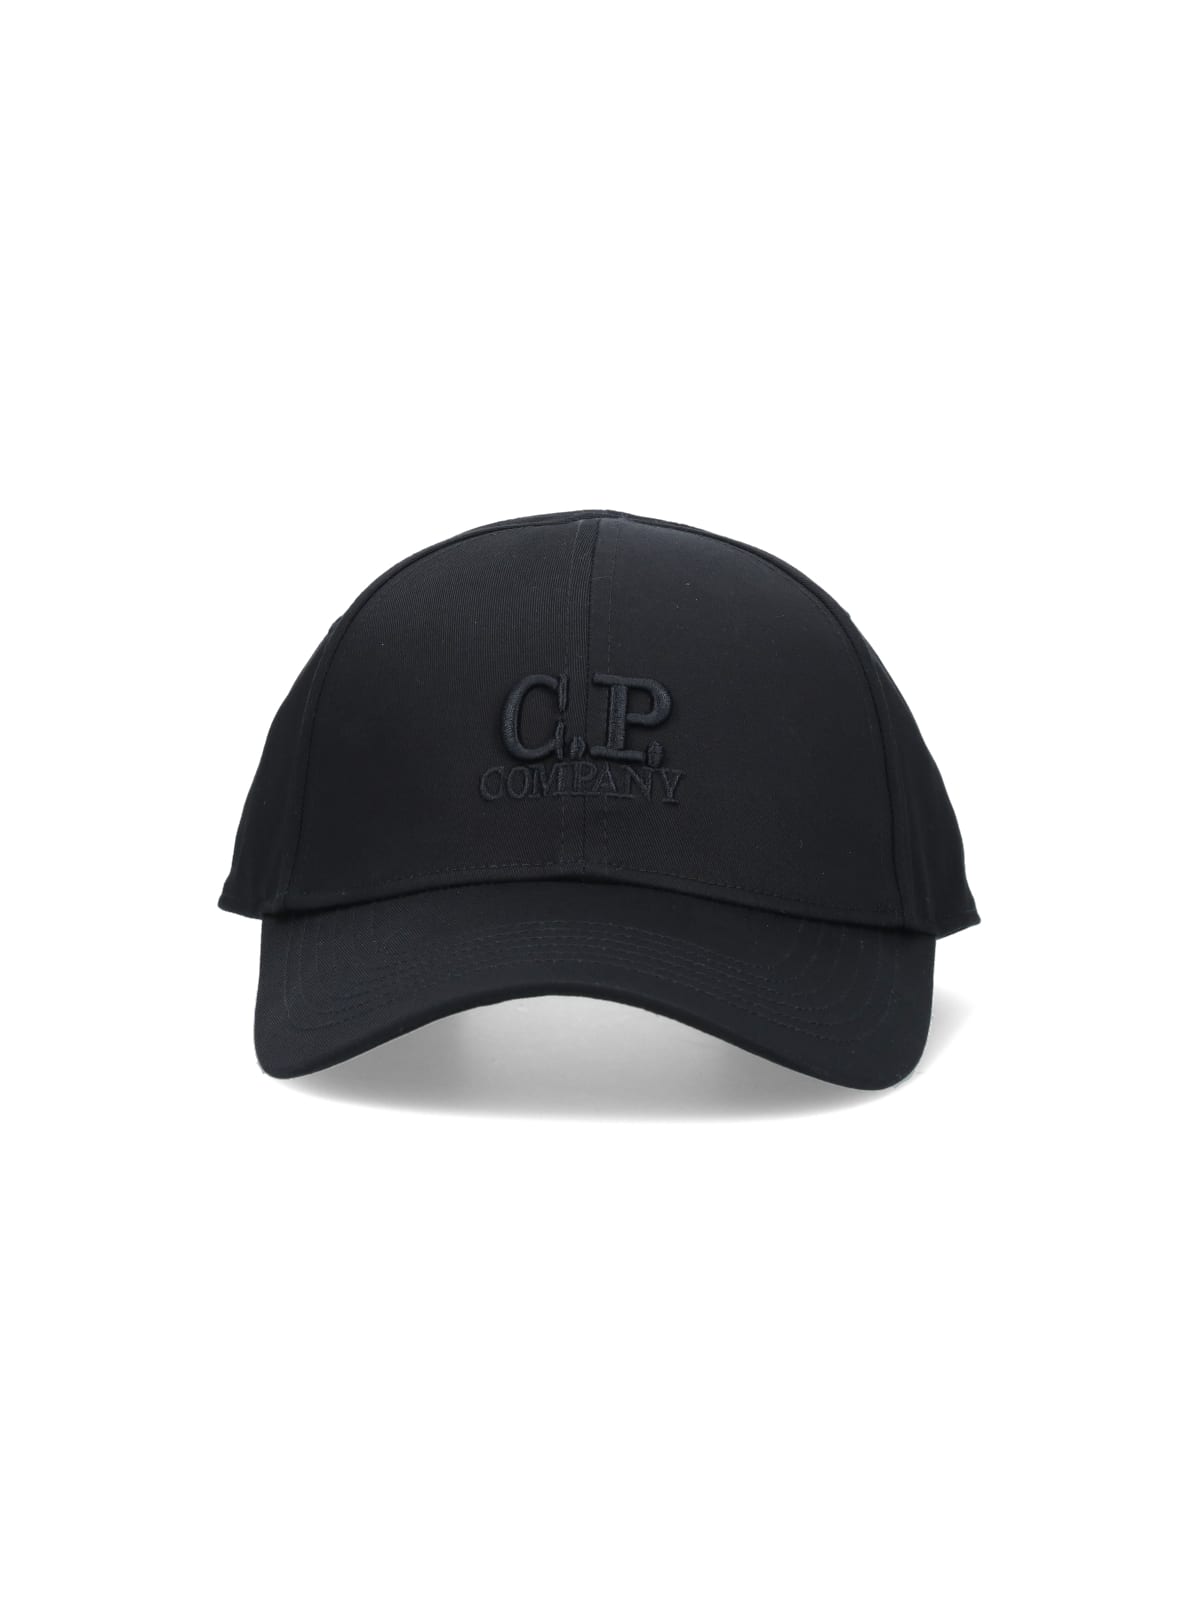 C.P. COMPANY HAT